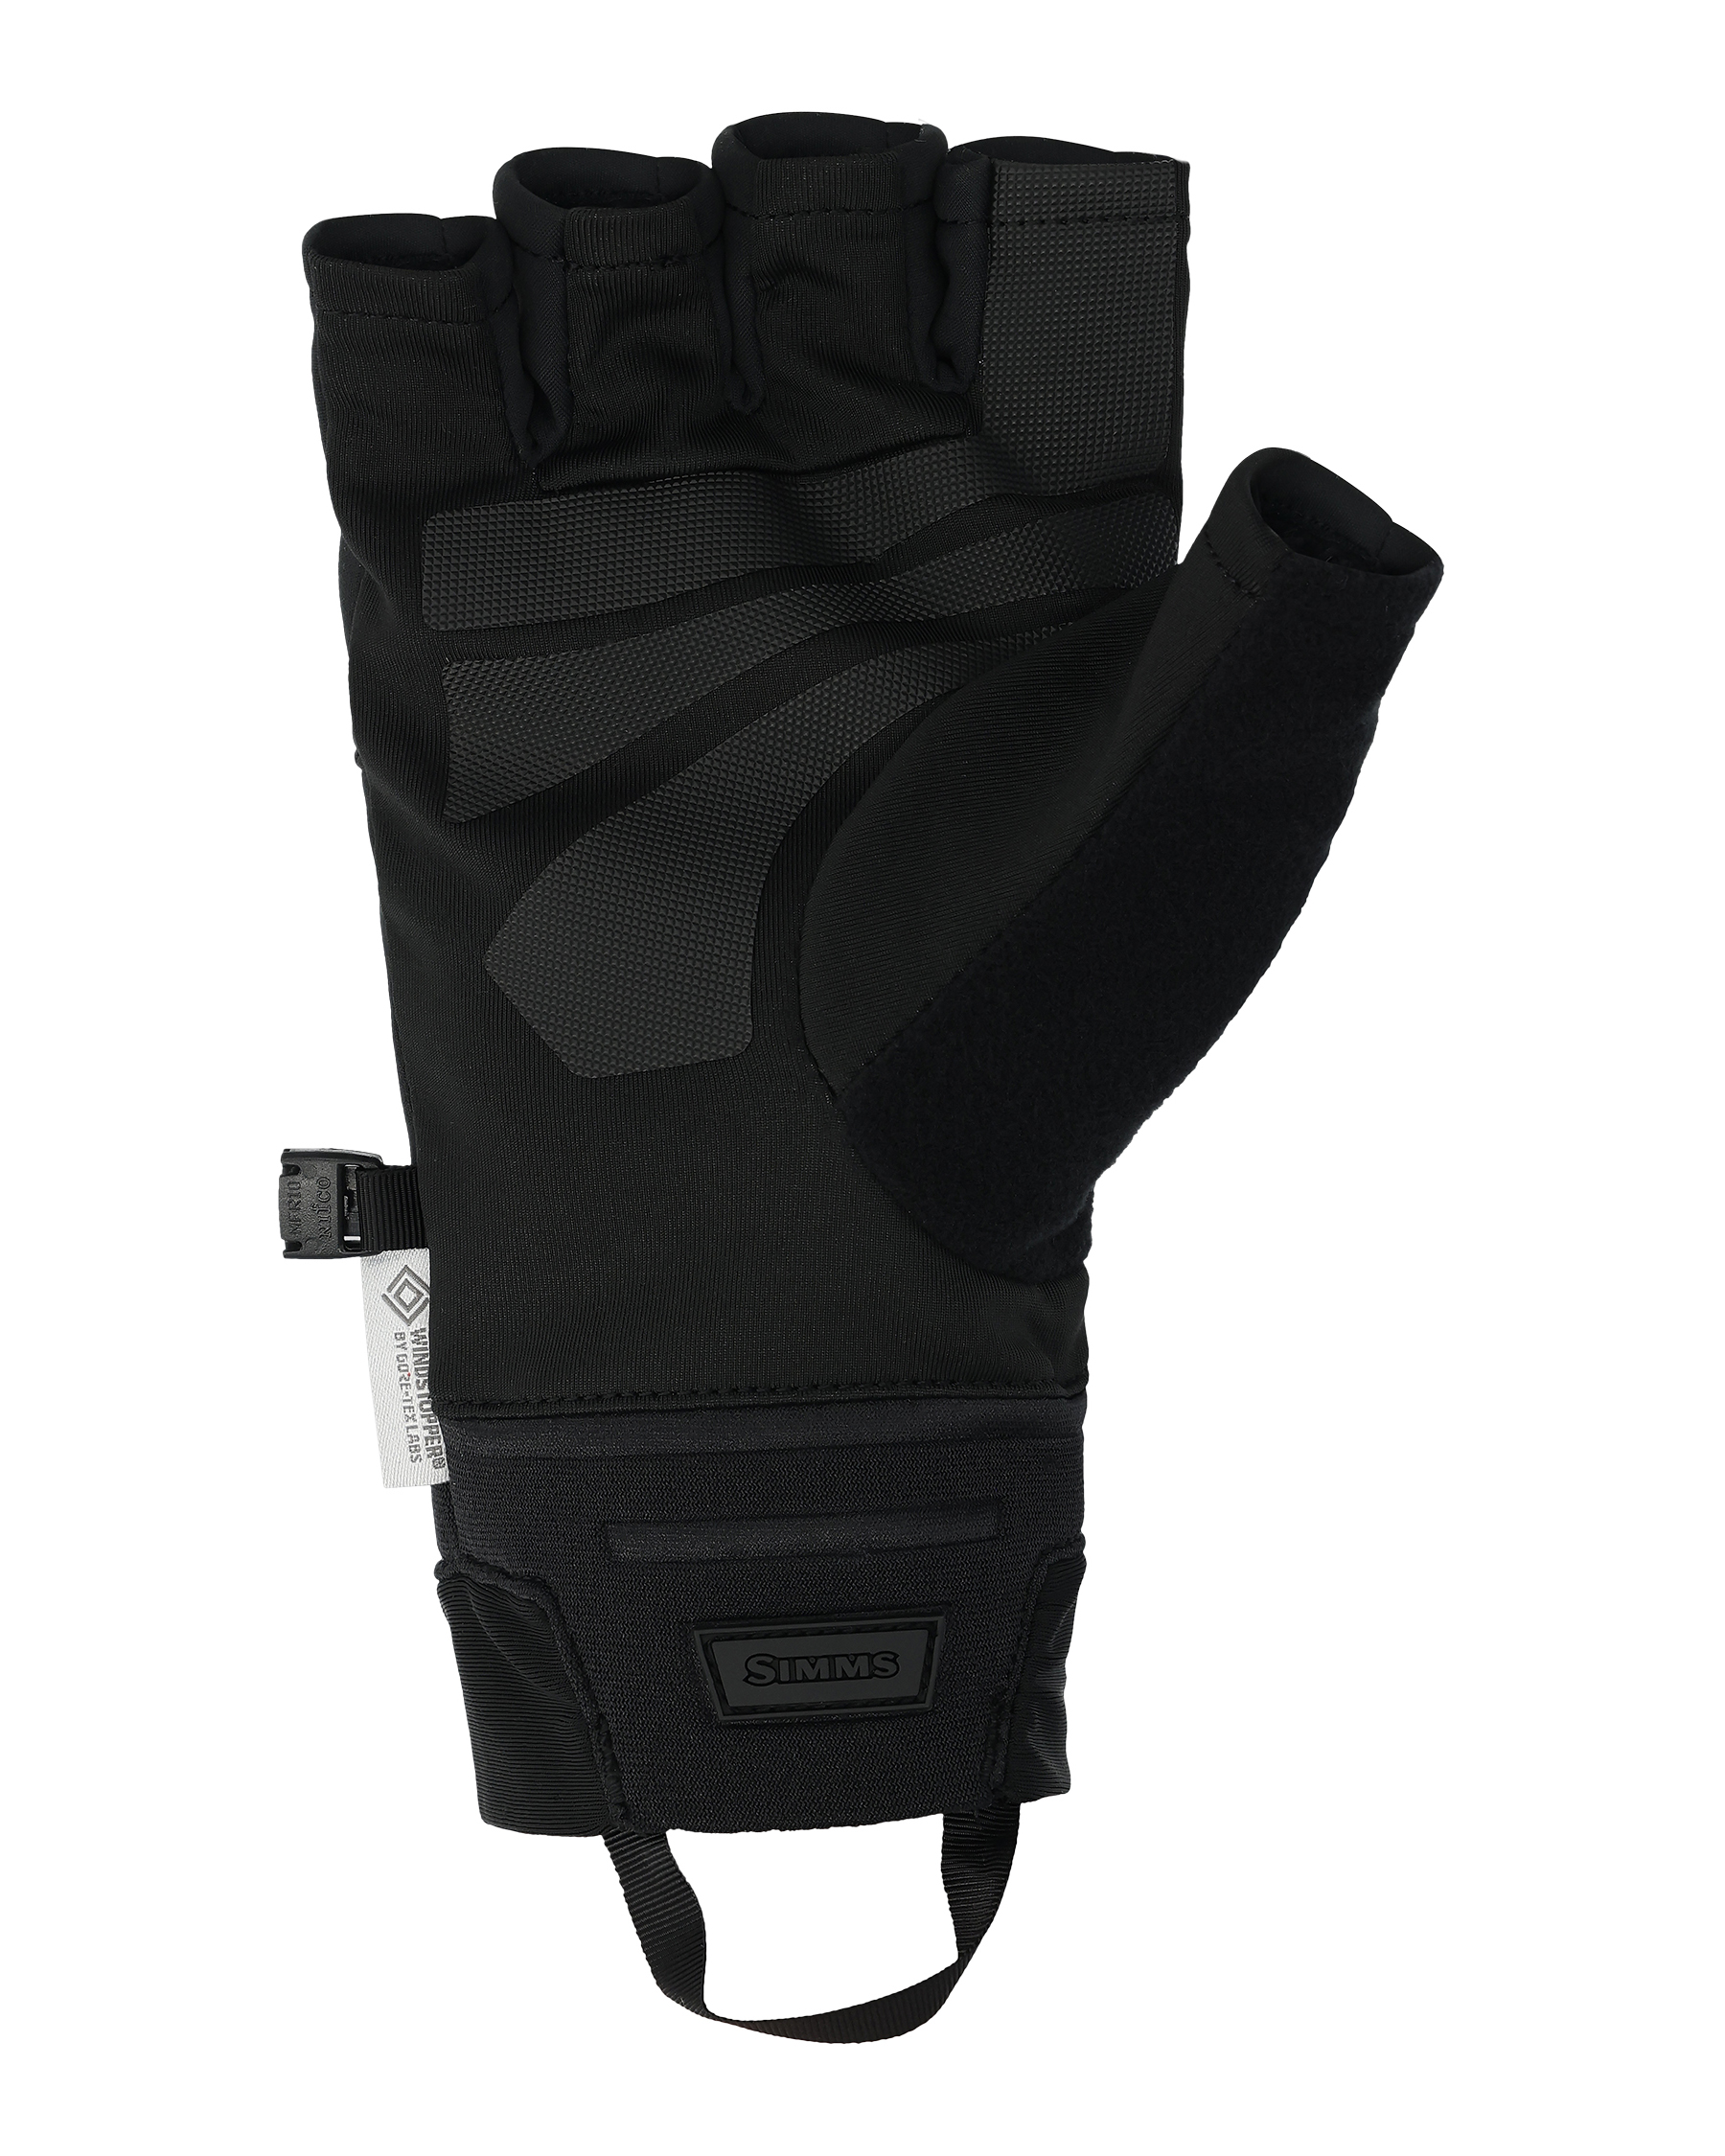 Windstopper Half-Finger Glove | Simms | マーヴェリック / Maverick